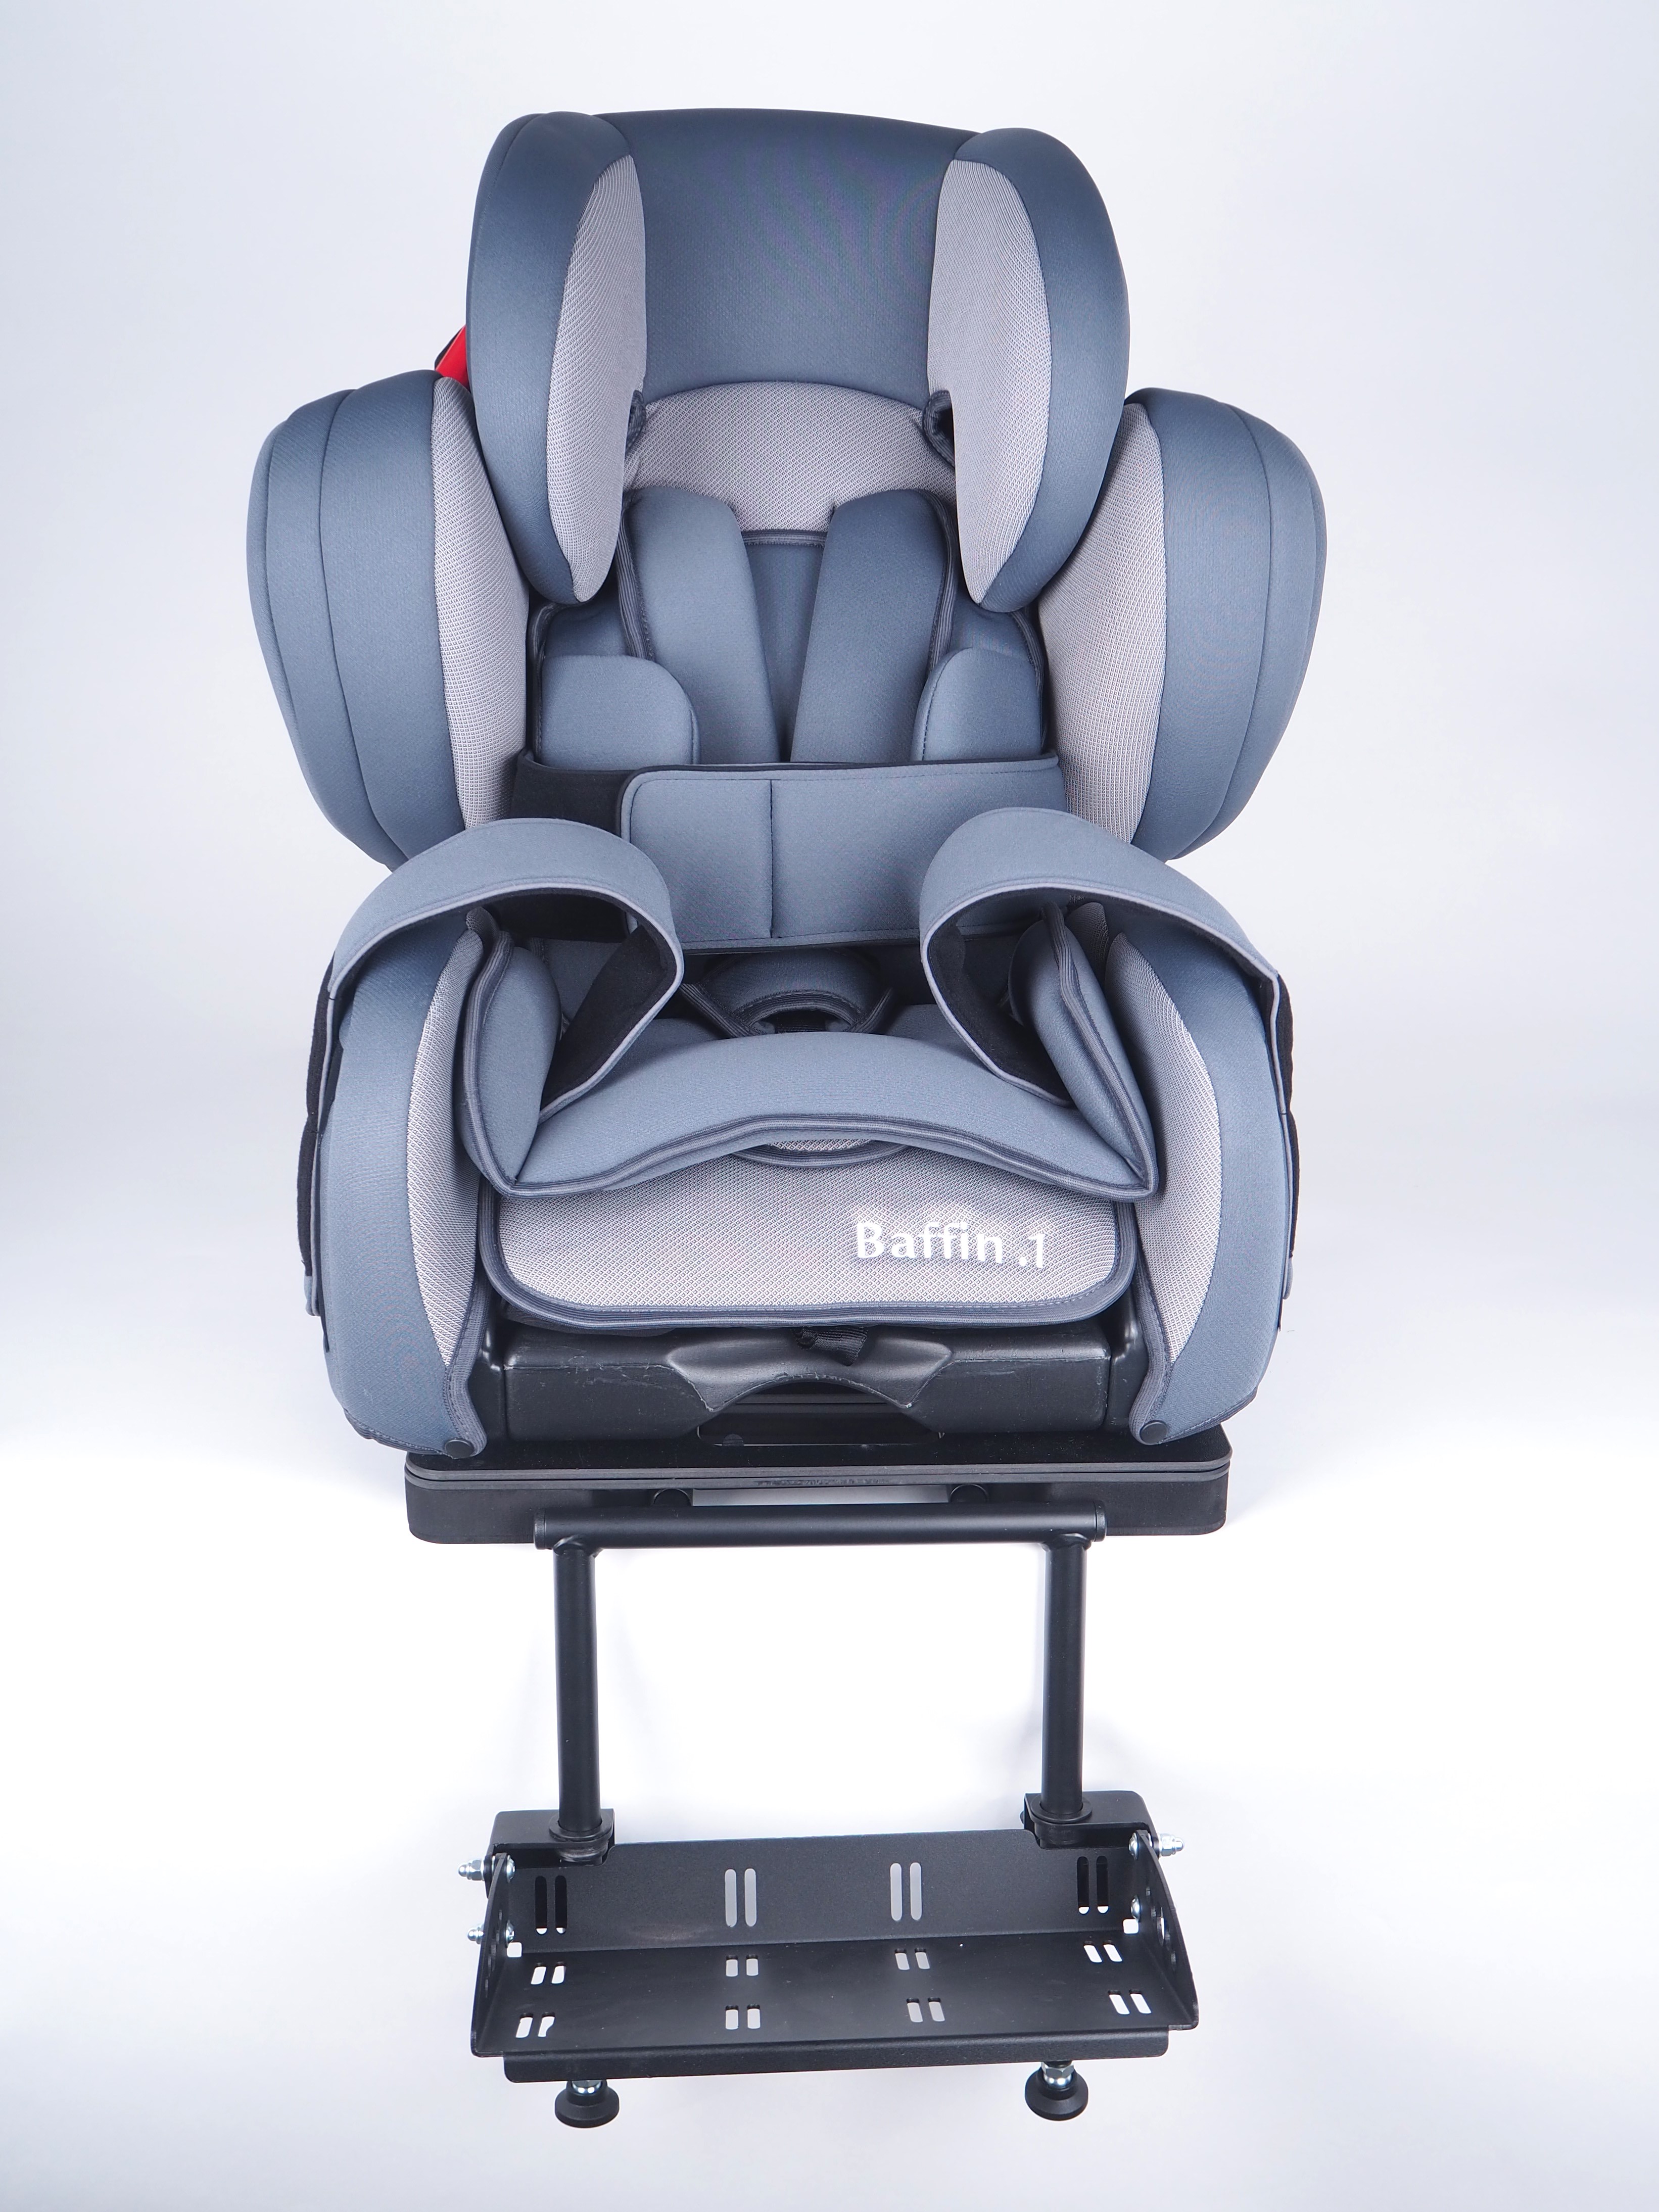 Baffin .1 Child Car Seat